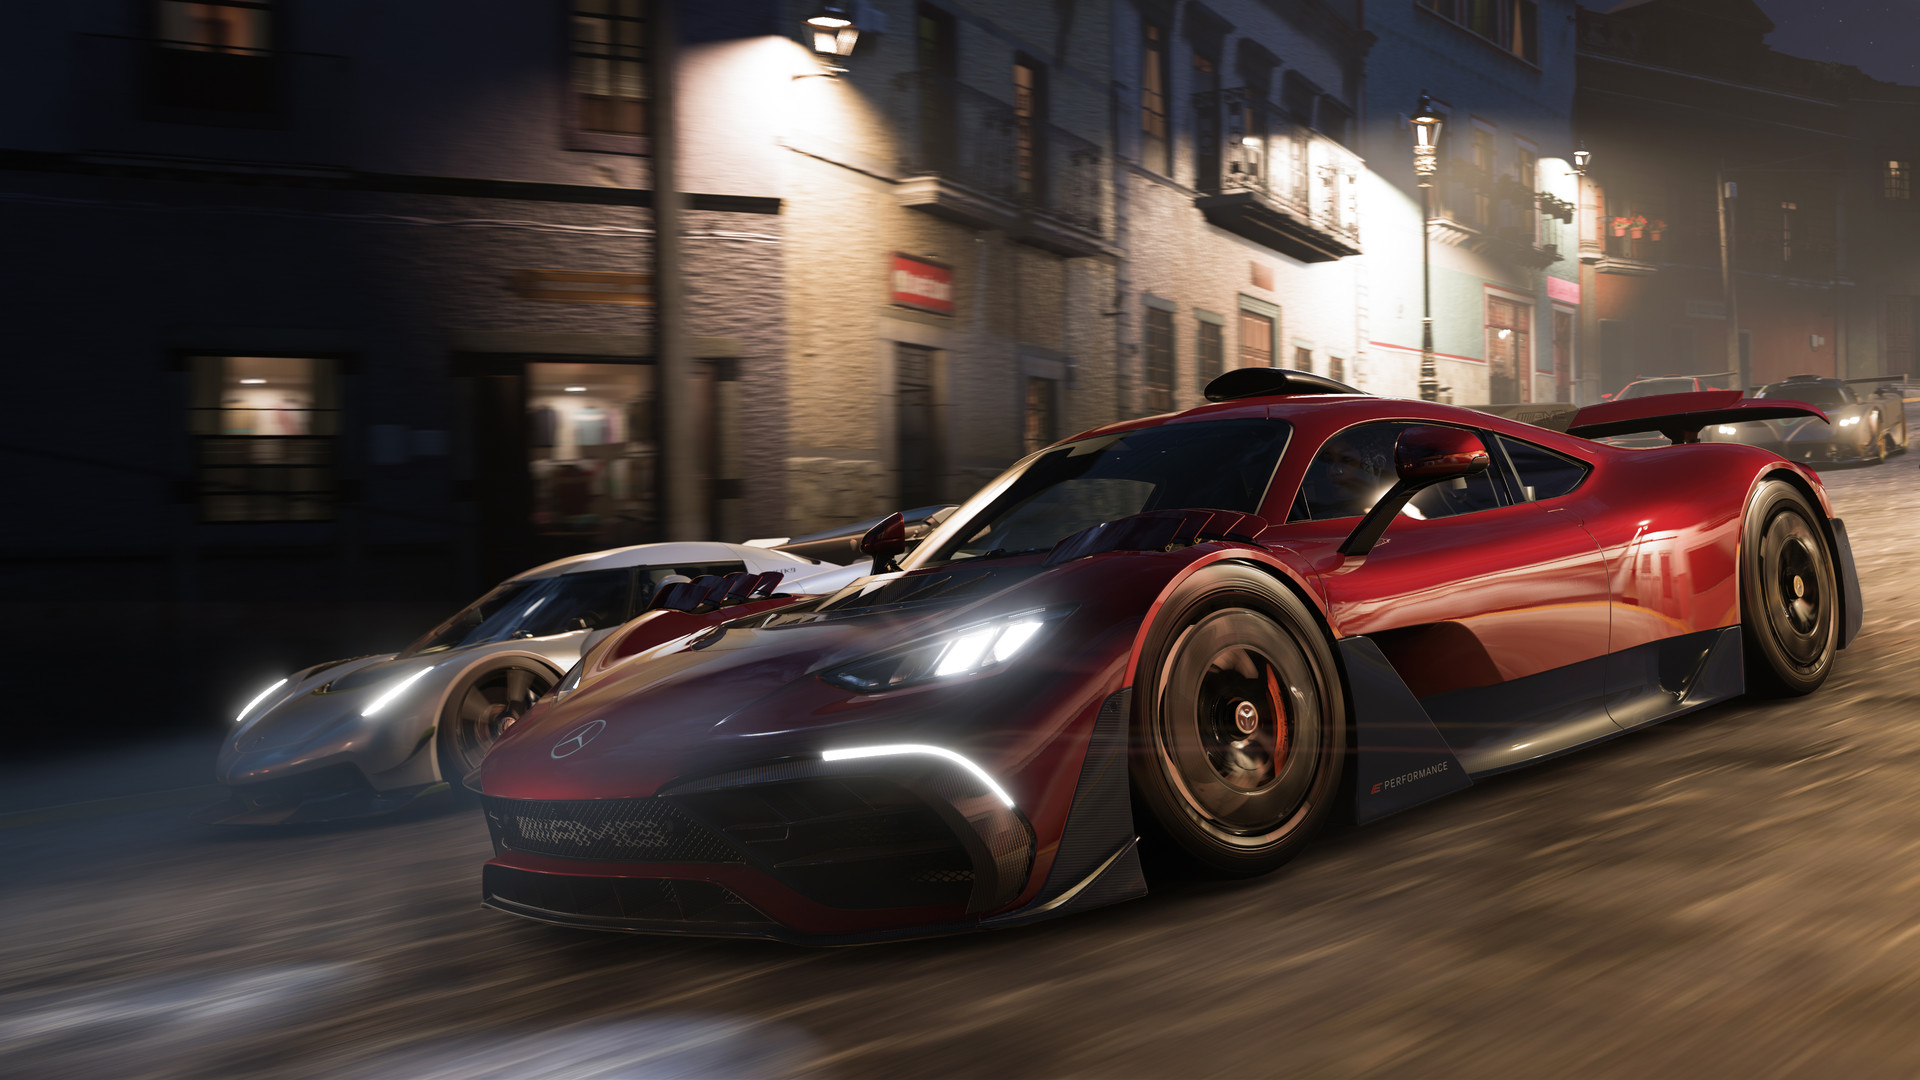 Forza Horizon 5 Premium+FH4+Hot Wheels+ONLINE+GLOBAL⭐